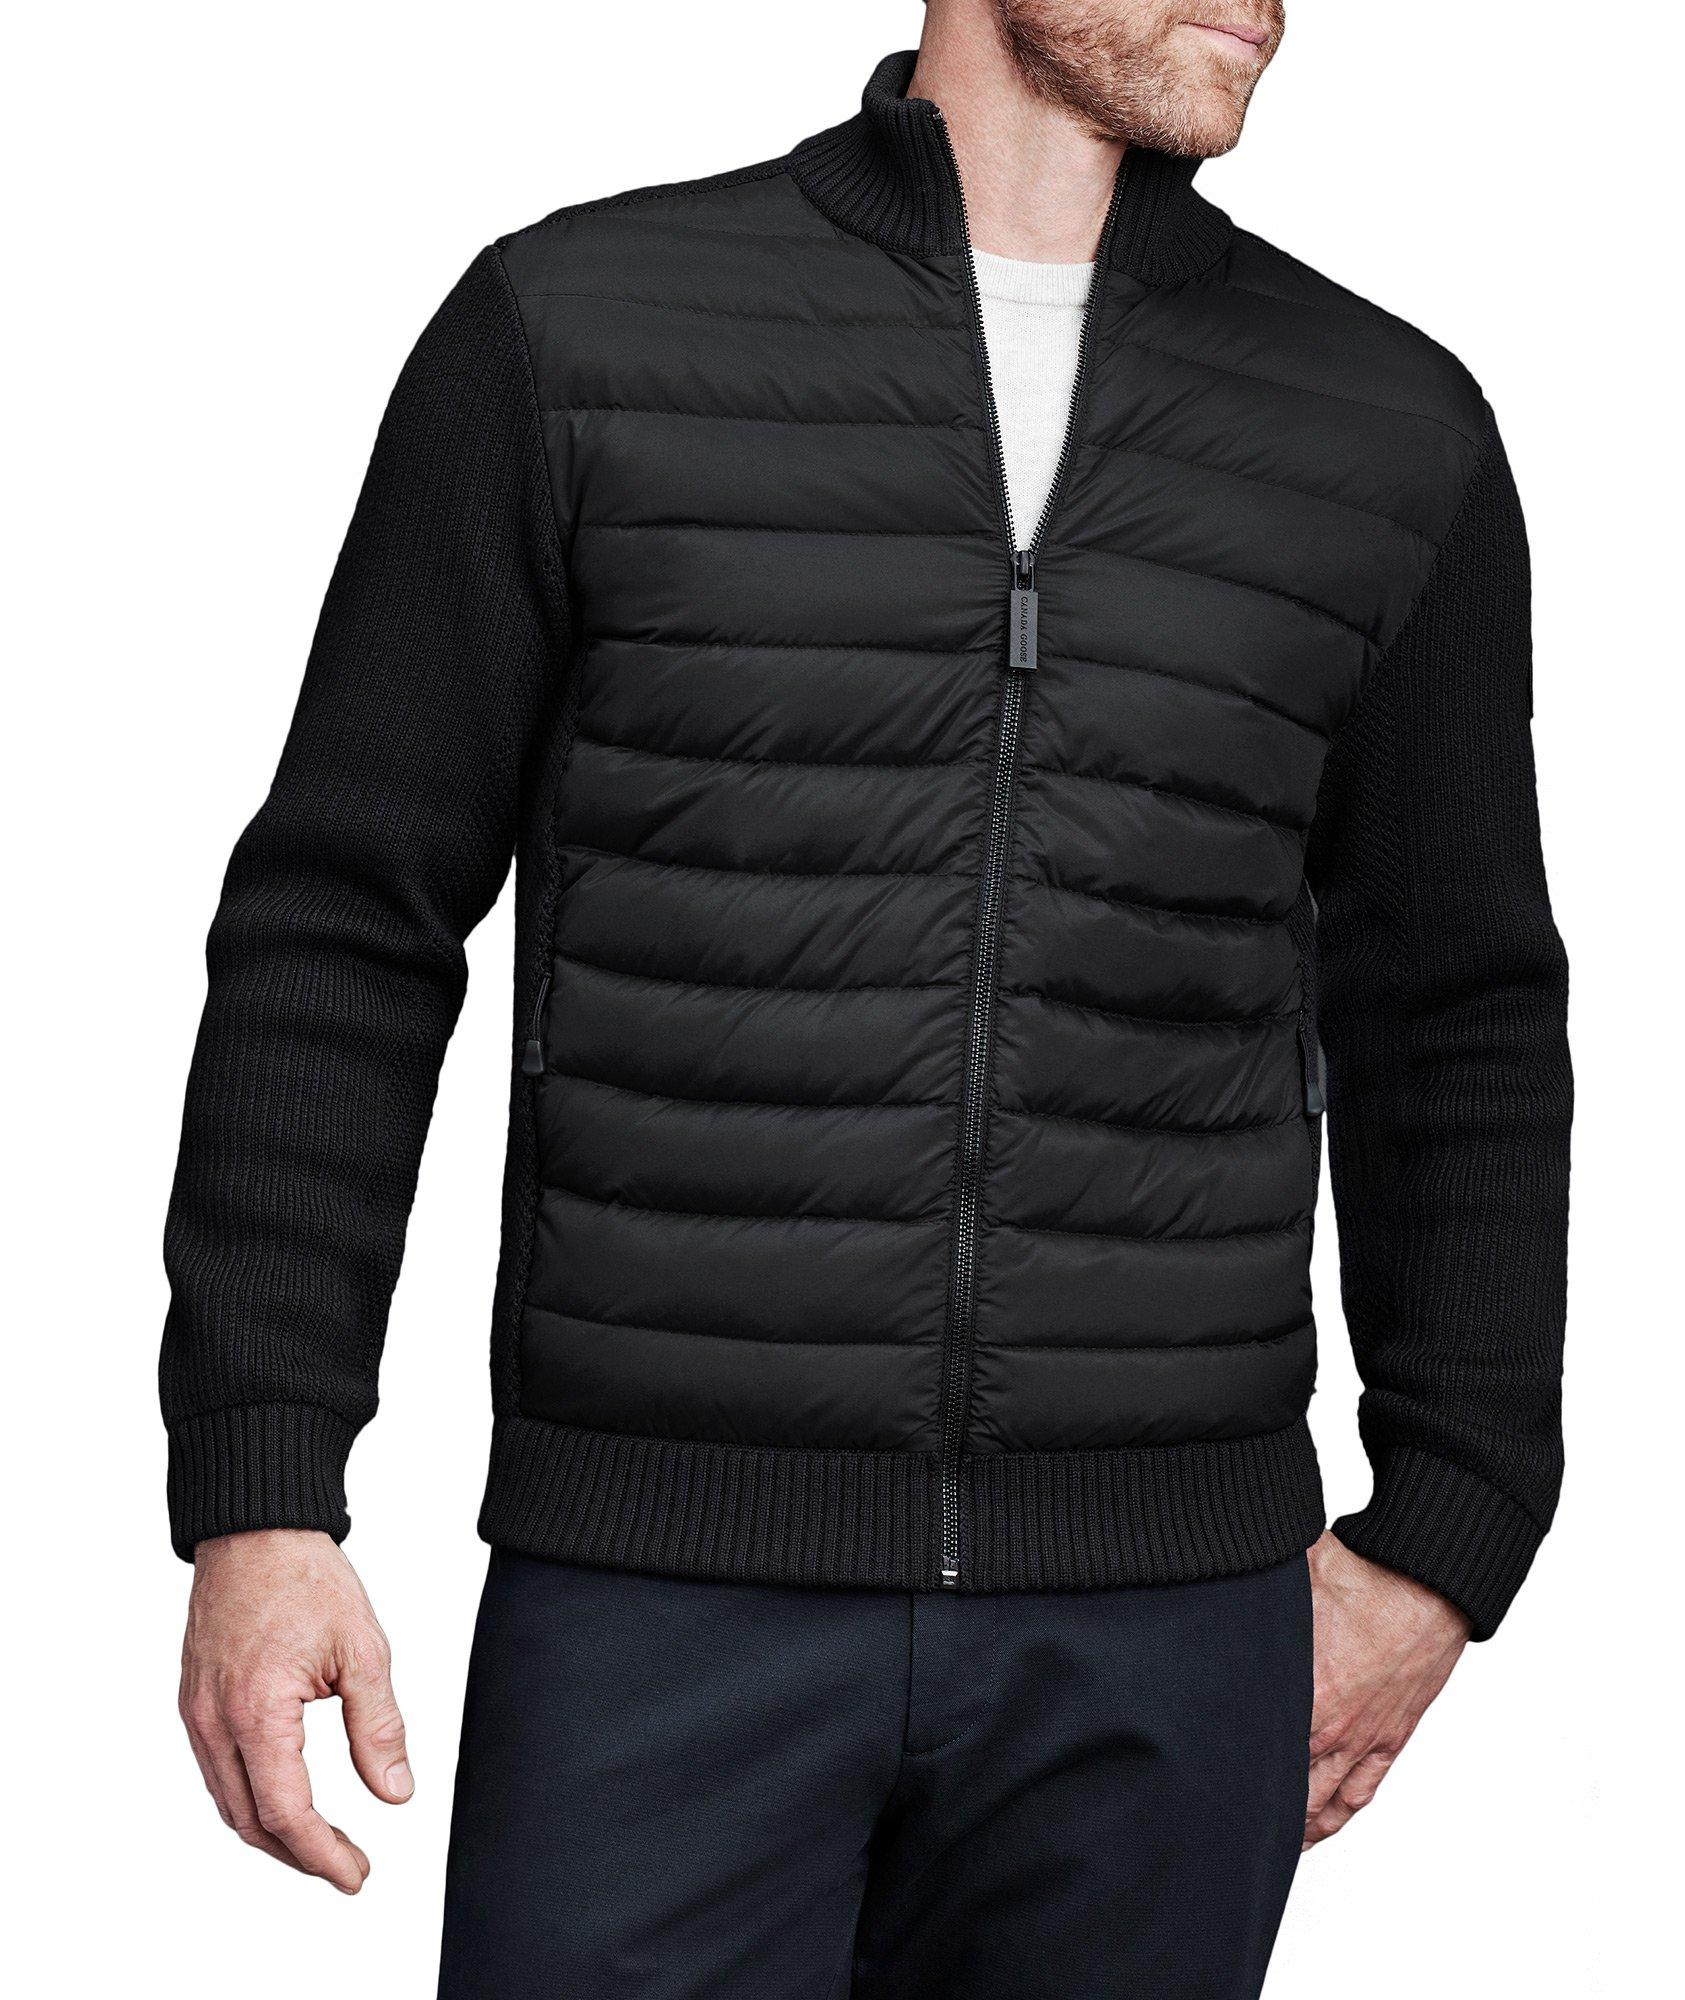 Manteau en tricot, modèle Hybridge image 0